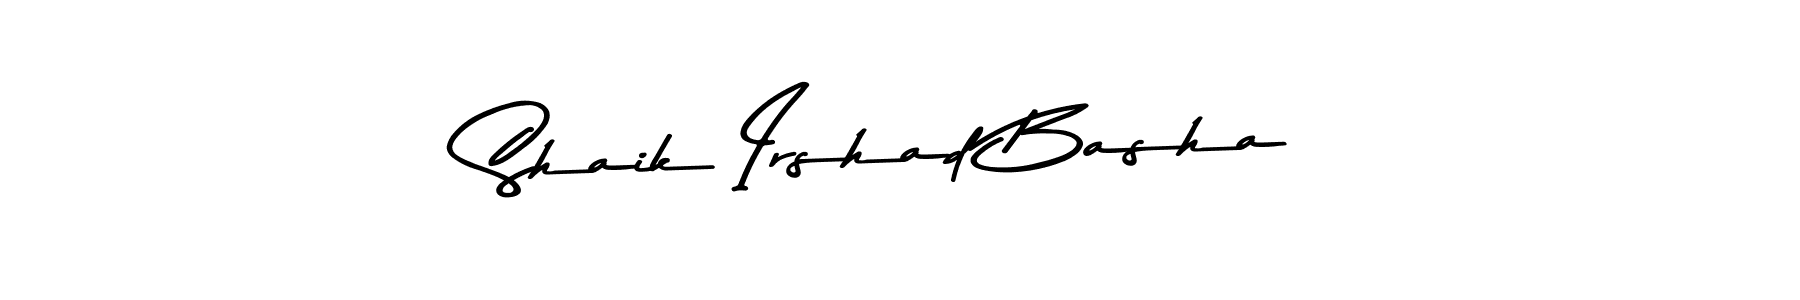 How to Draw Shaik Irshad Basha signature style? Asem Kandis PERSONAL USE is a latest design signature styles for name Shaik Irshad Basha. Shaik Irshad Basha signature style 9 images and pictures png